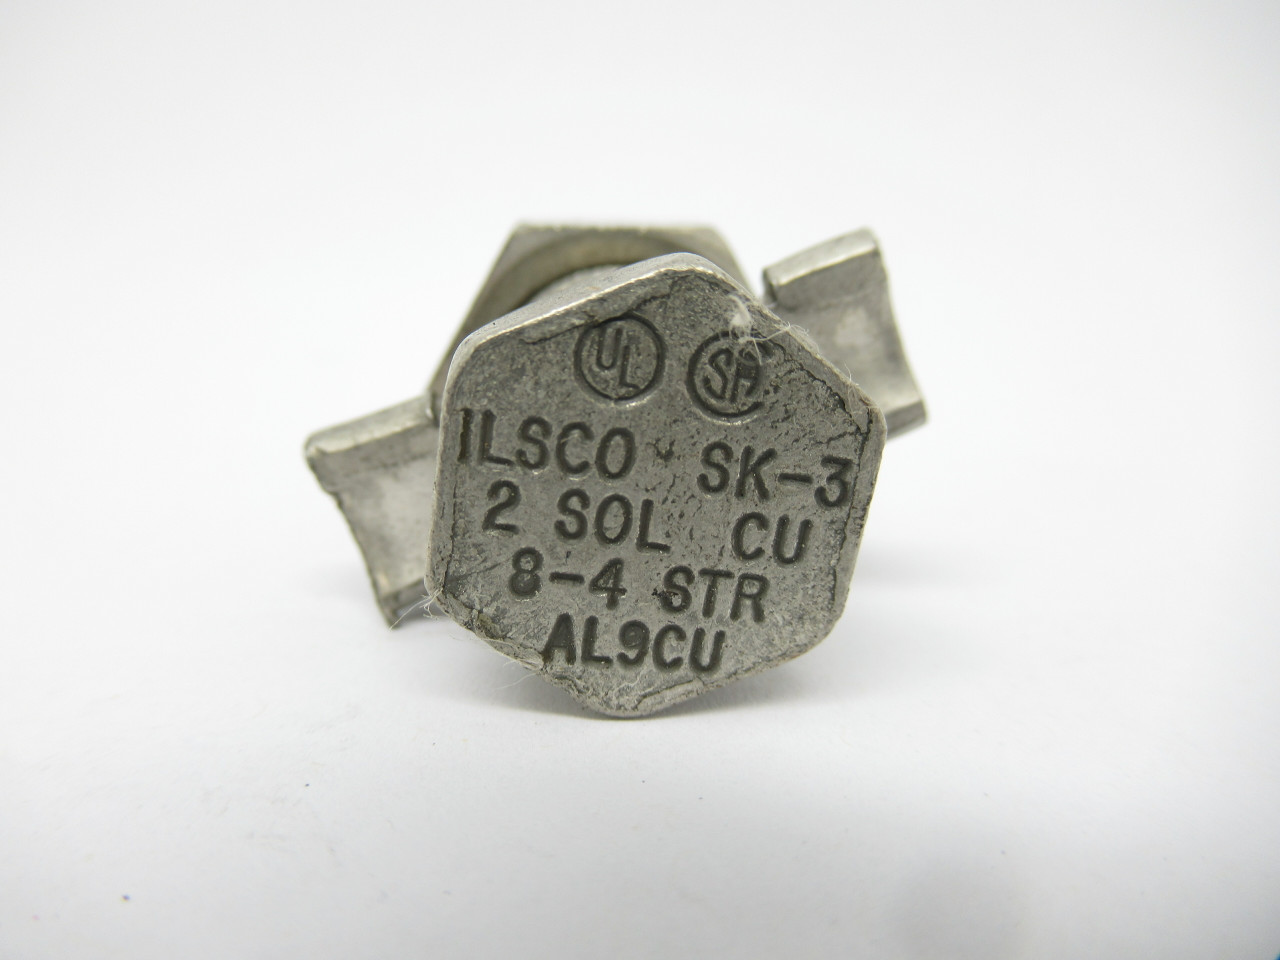 Ilsco SK-3 Split Bolt Connector 2Sol CU 8-4STR USED